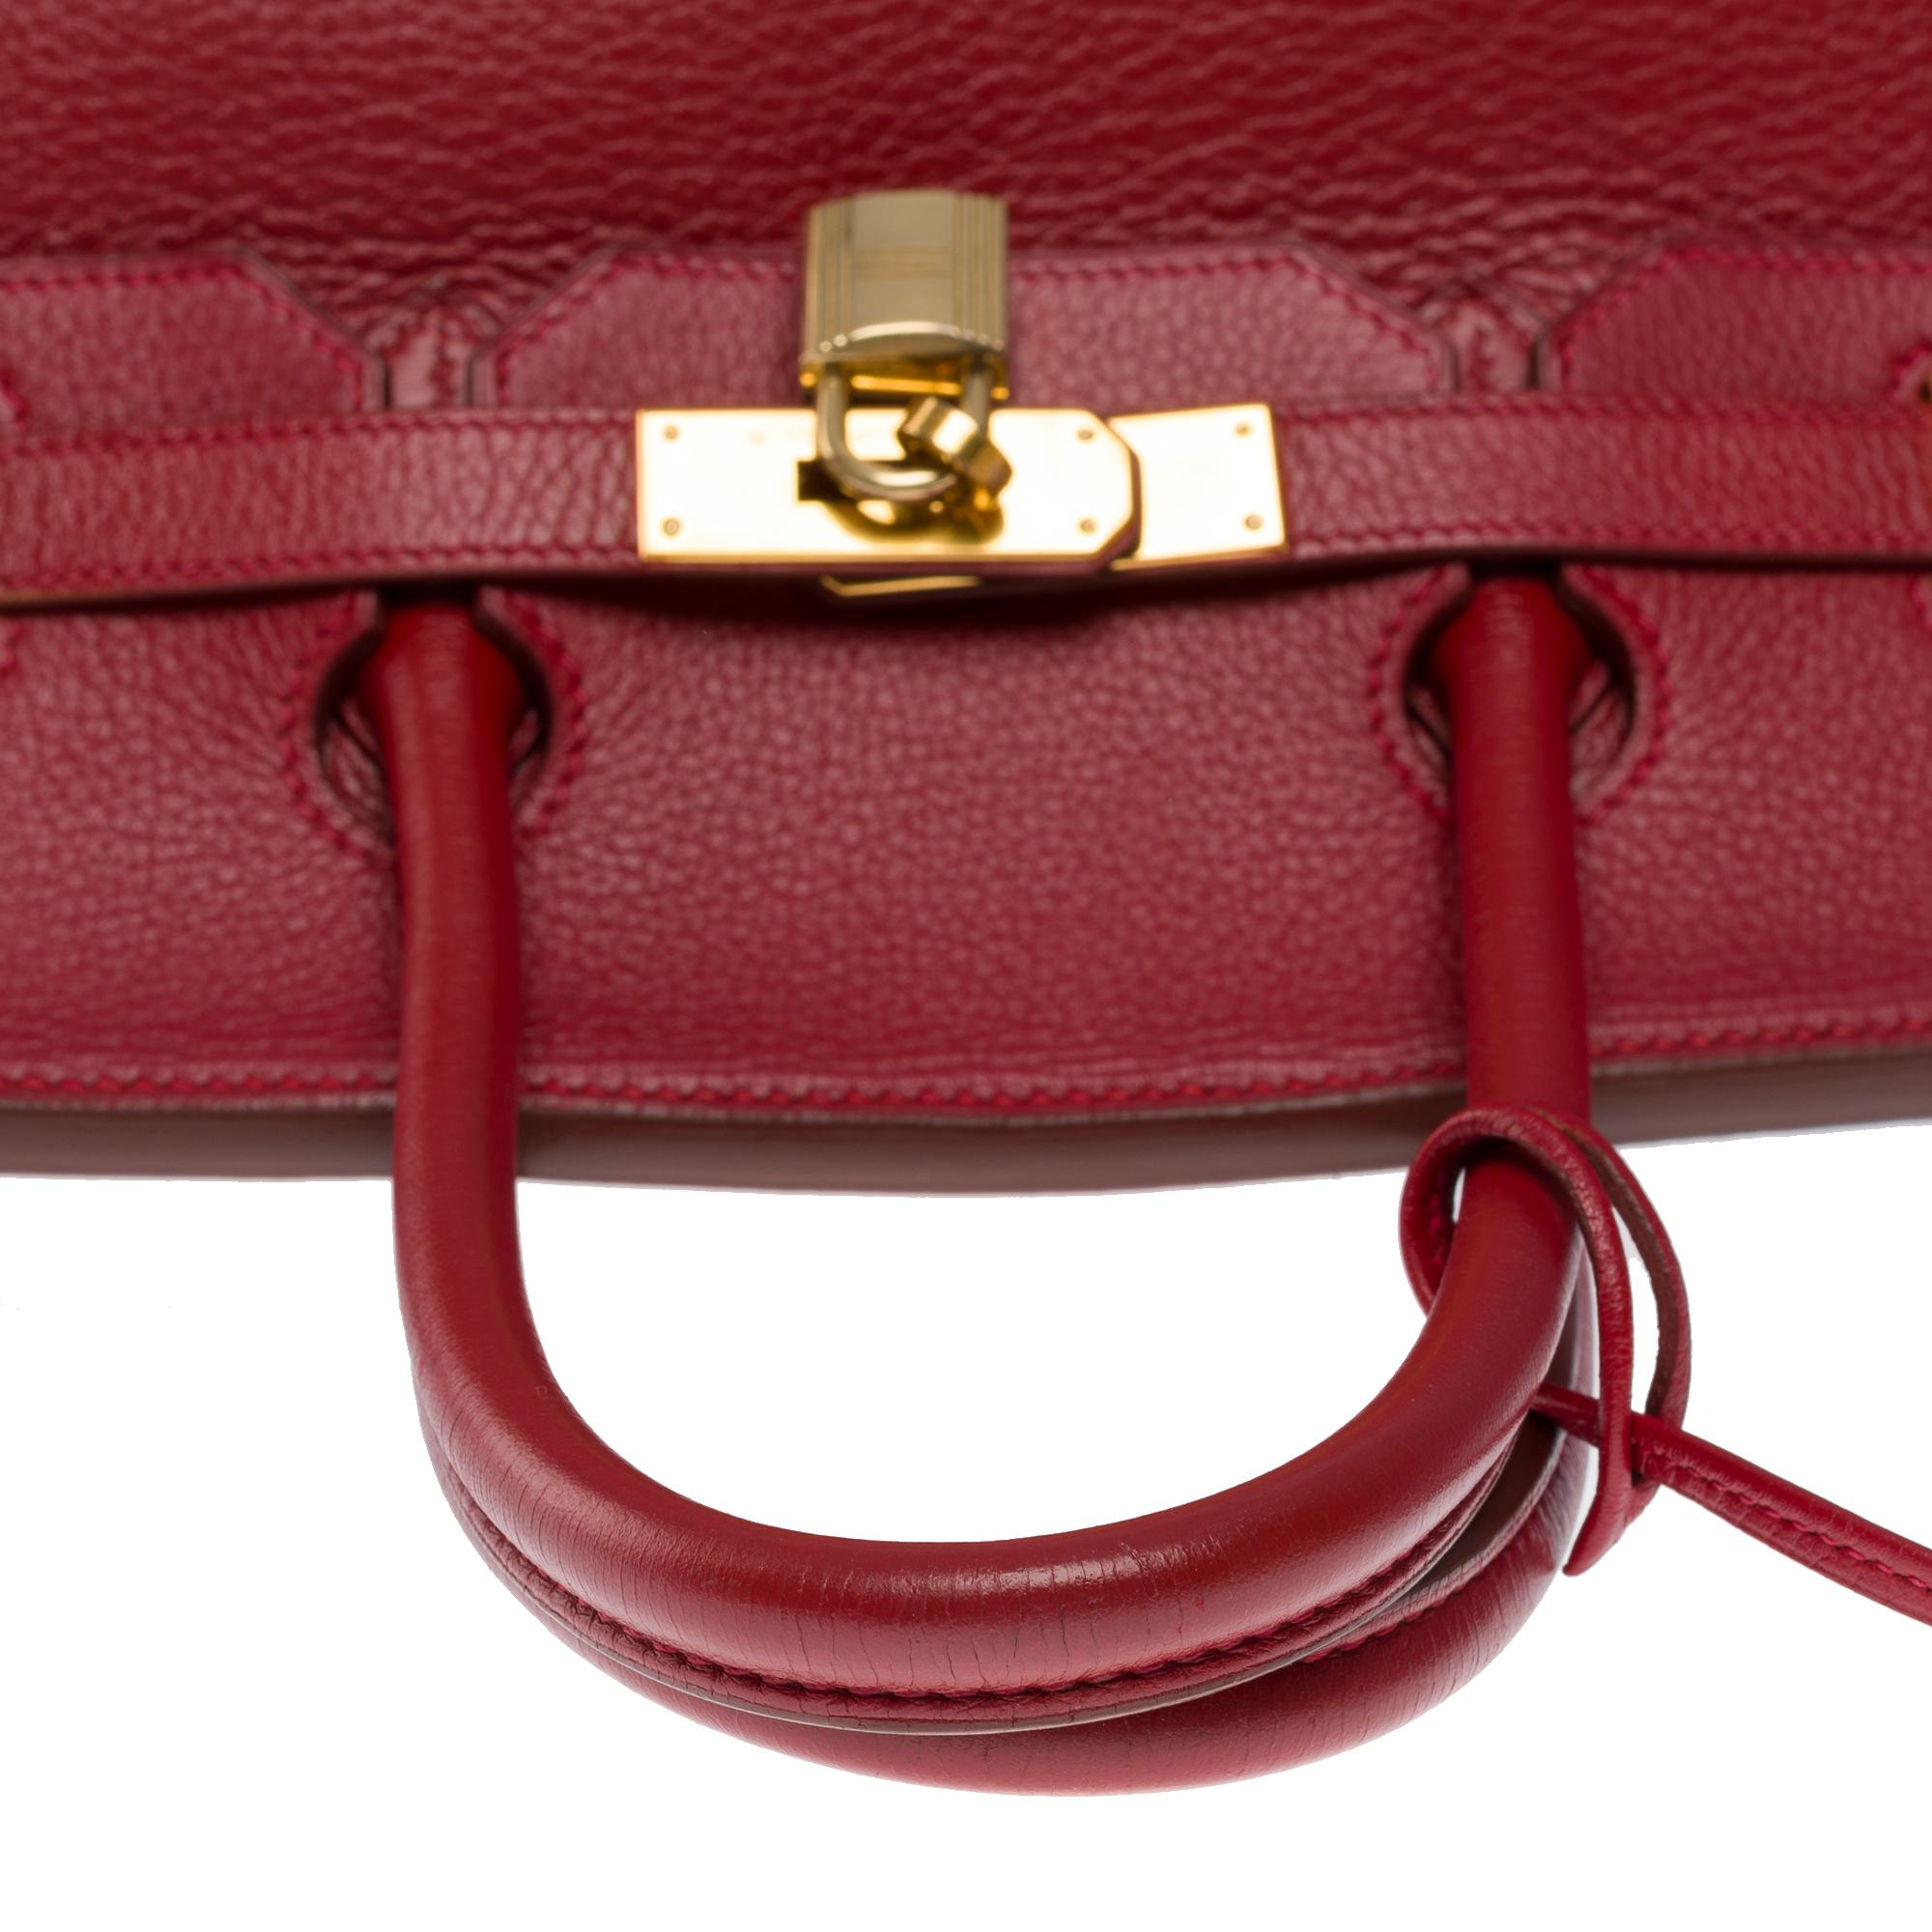 Stunning Hermès Birkin 35 handbag in Rouge Garance Togo leather, GHW For Sale 4